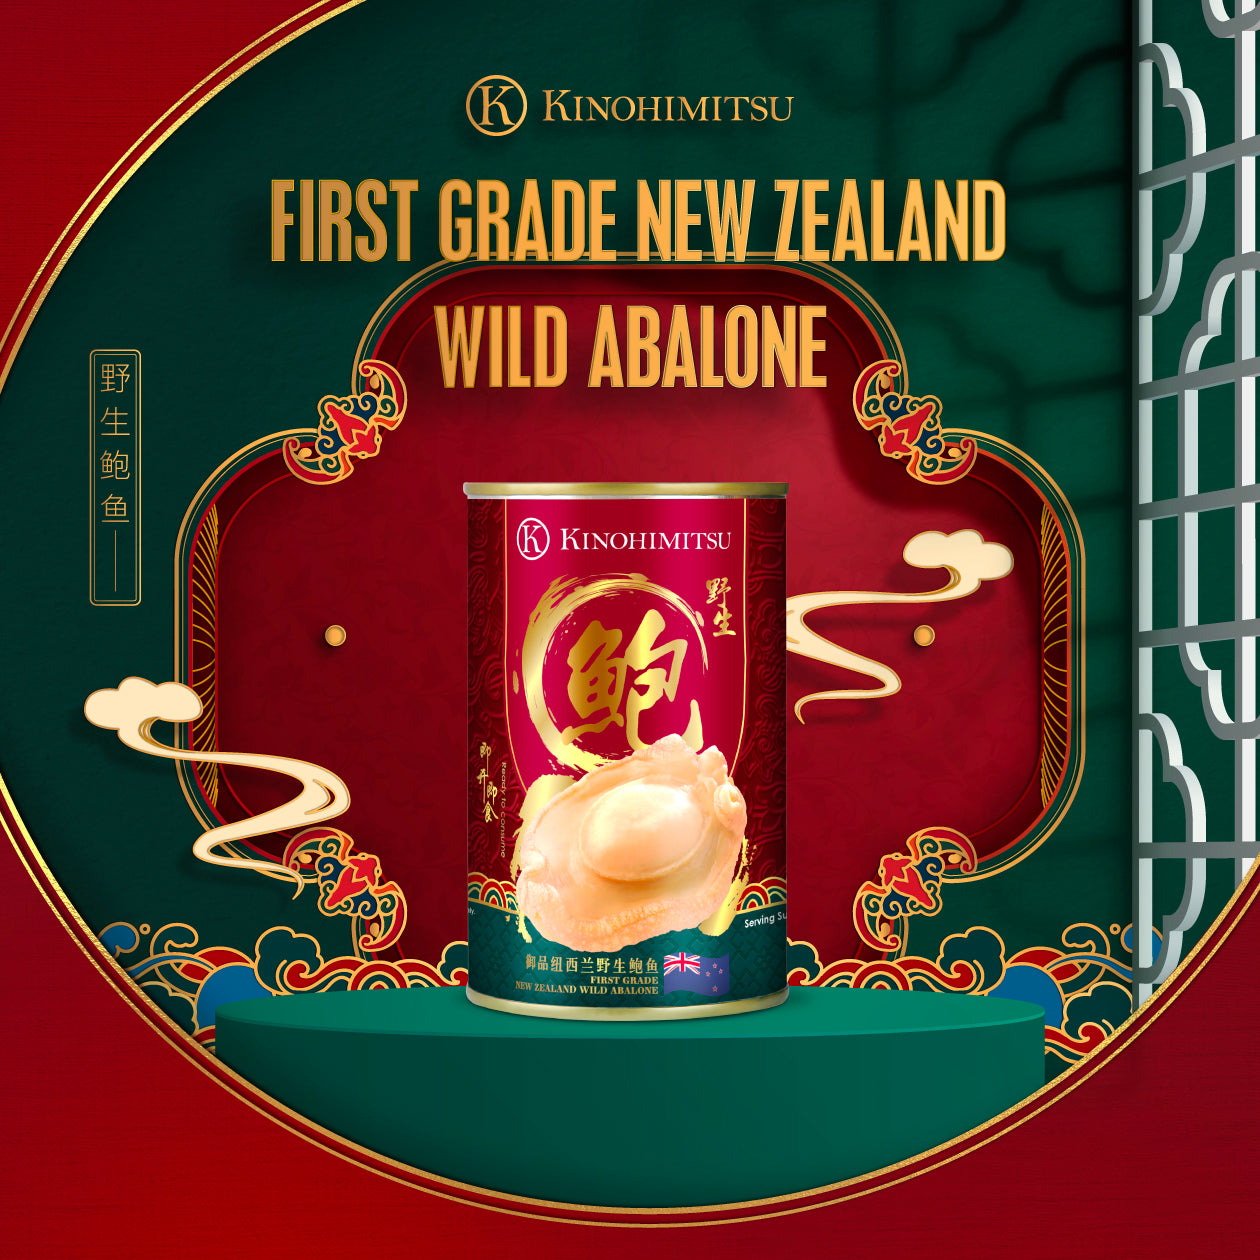 First Grade New Zealand Wild Abalone